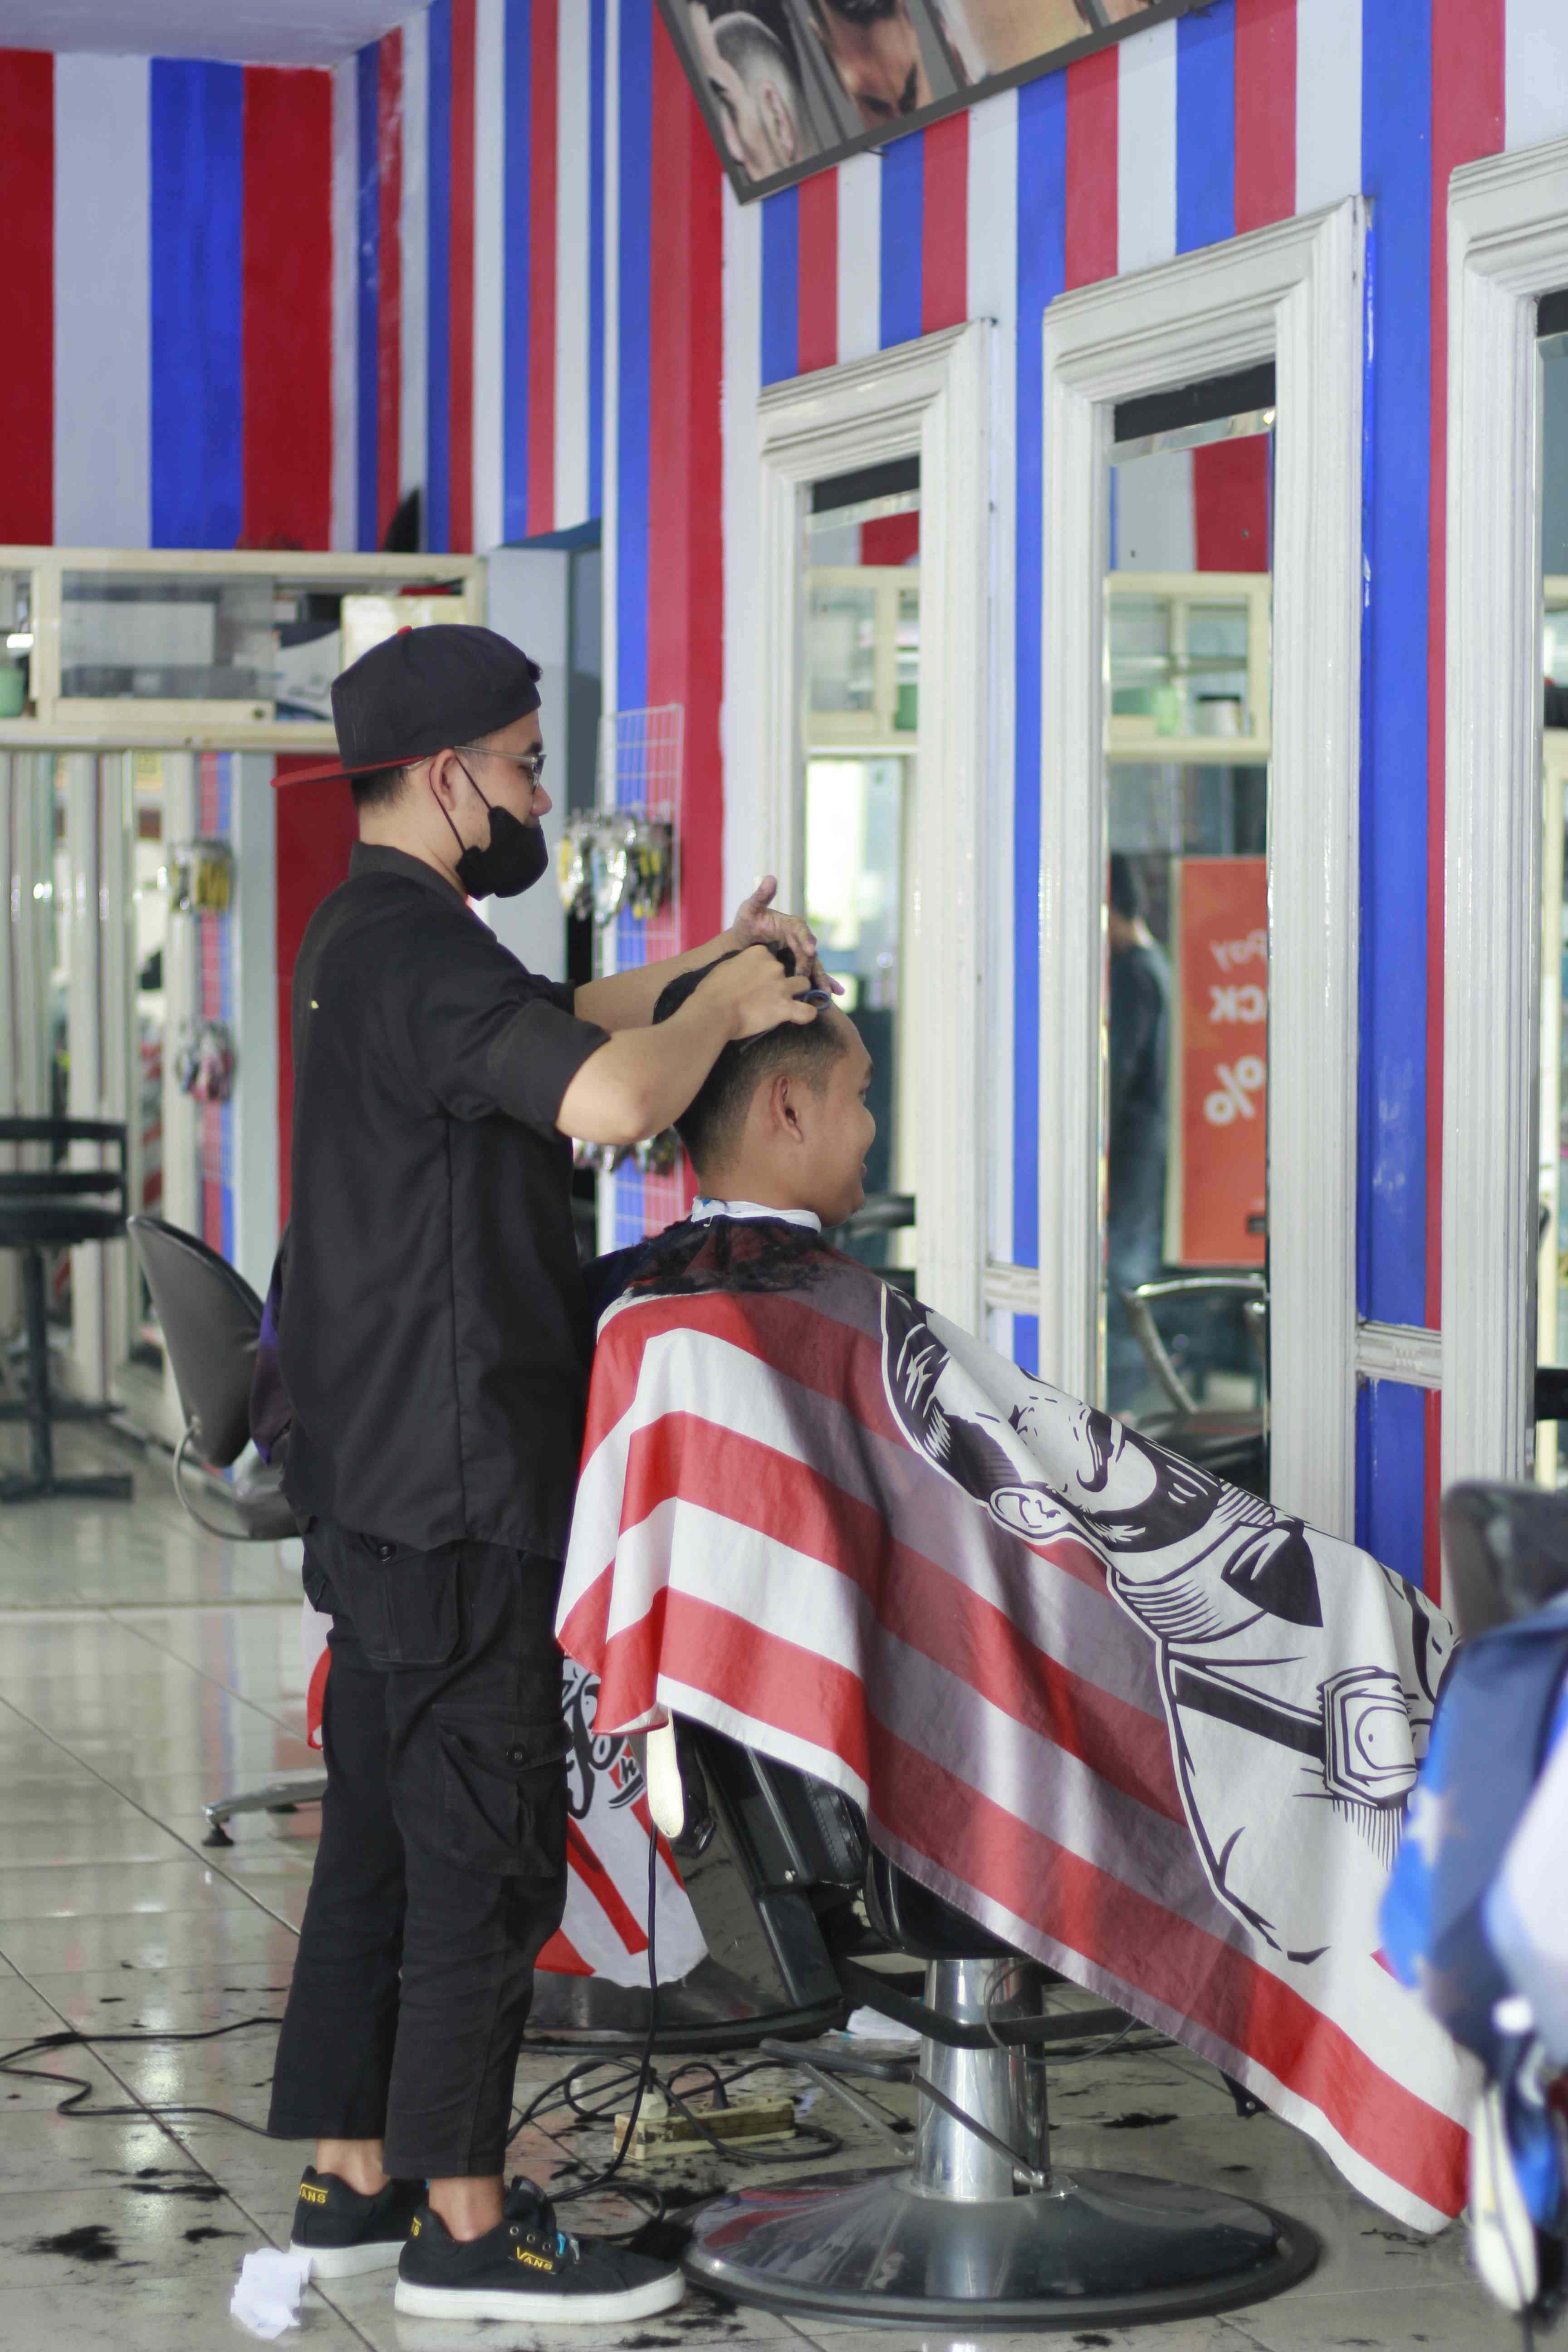 Jasa Cukur Rambut Di Kota Malang Keren